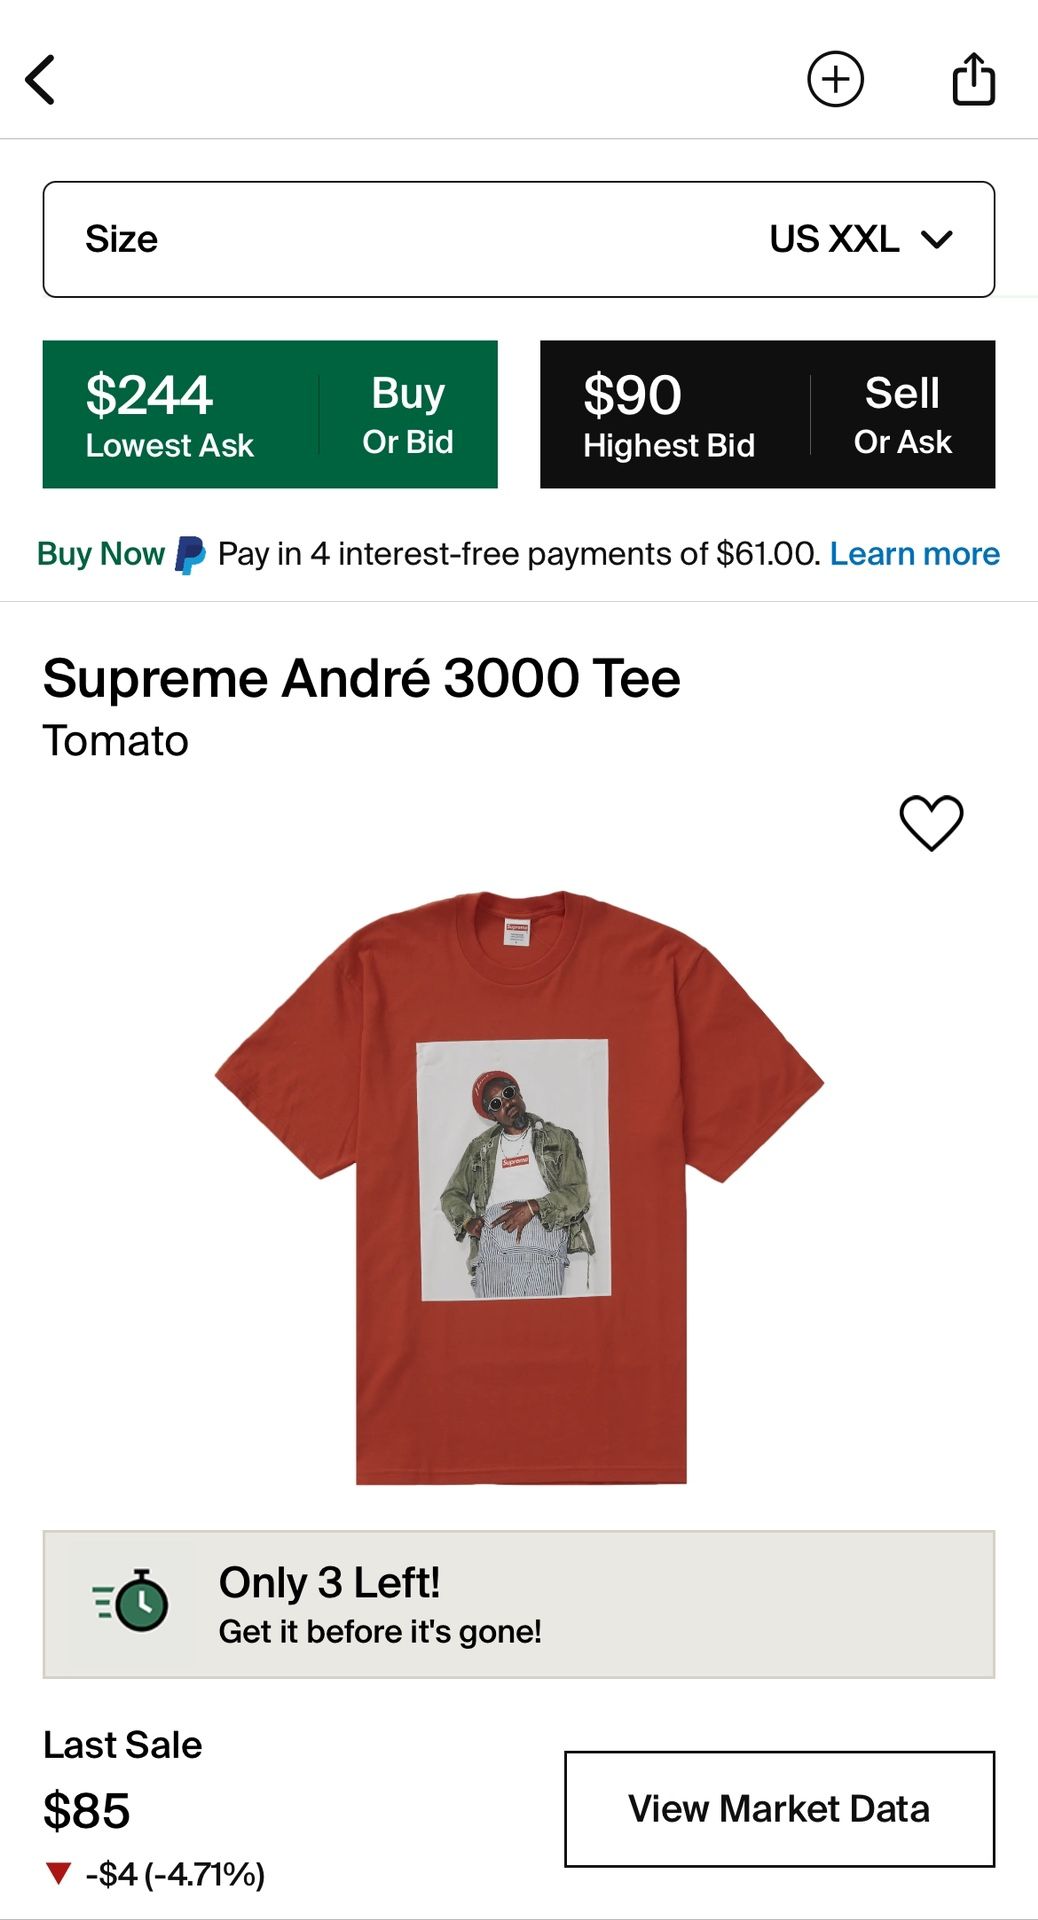 Supreme Andre 3000 Tee